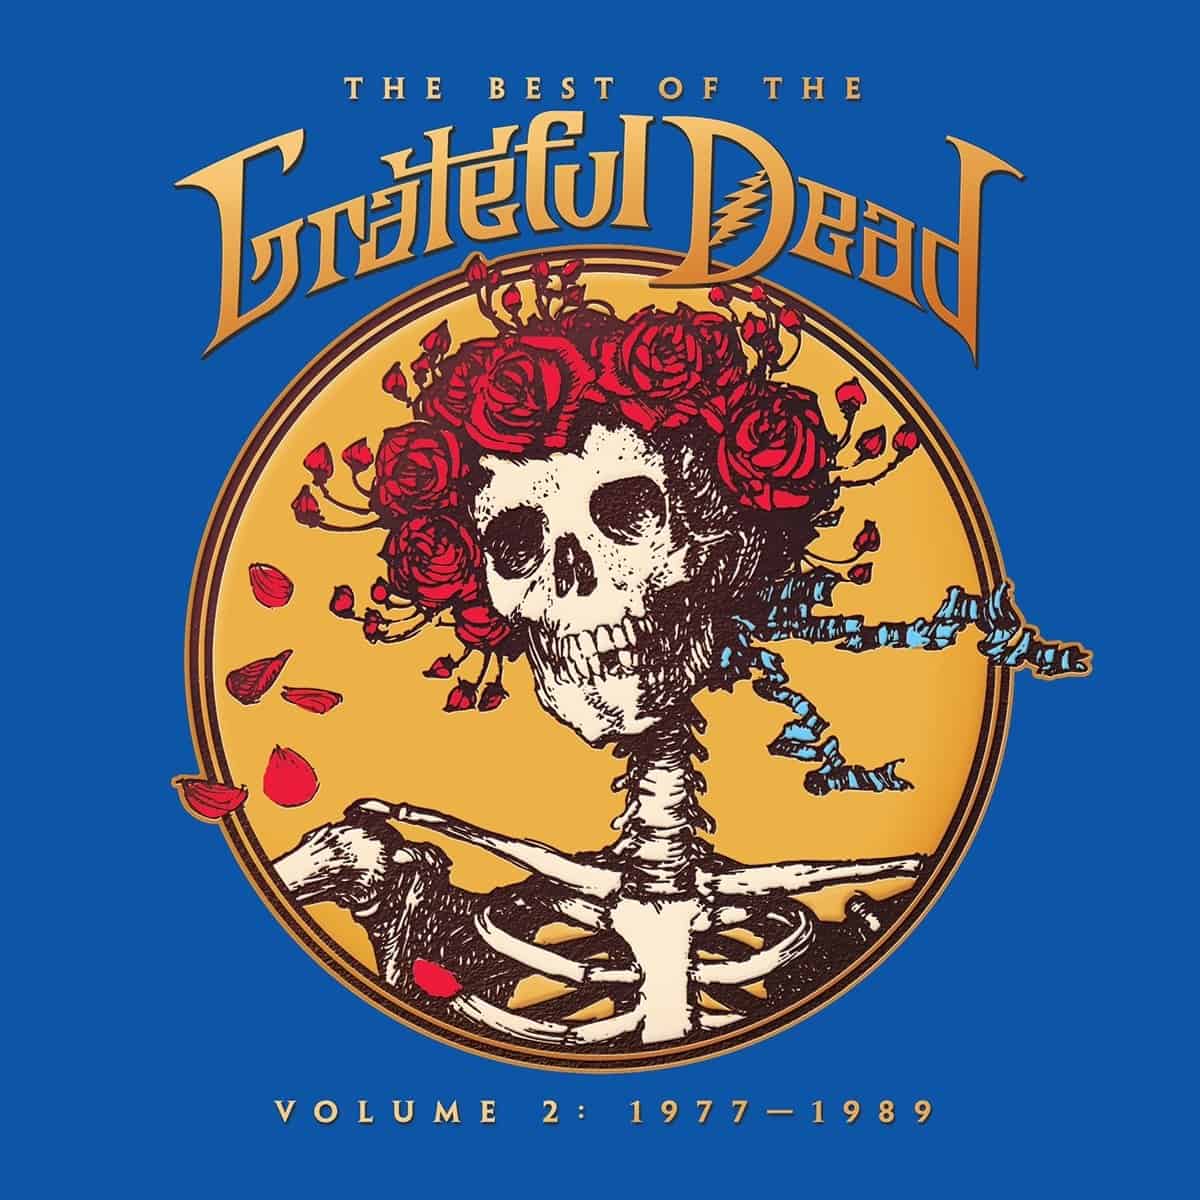 Best-Of-The-Grateful-Dead-Vol-2 -1977-1989-vinyl-record-album-front